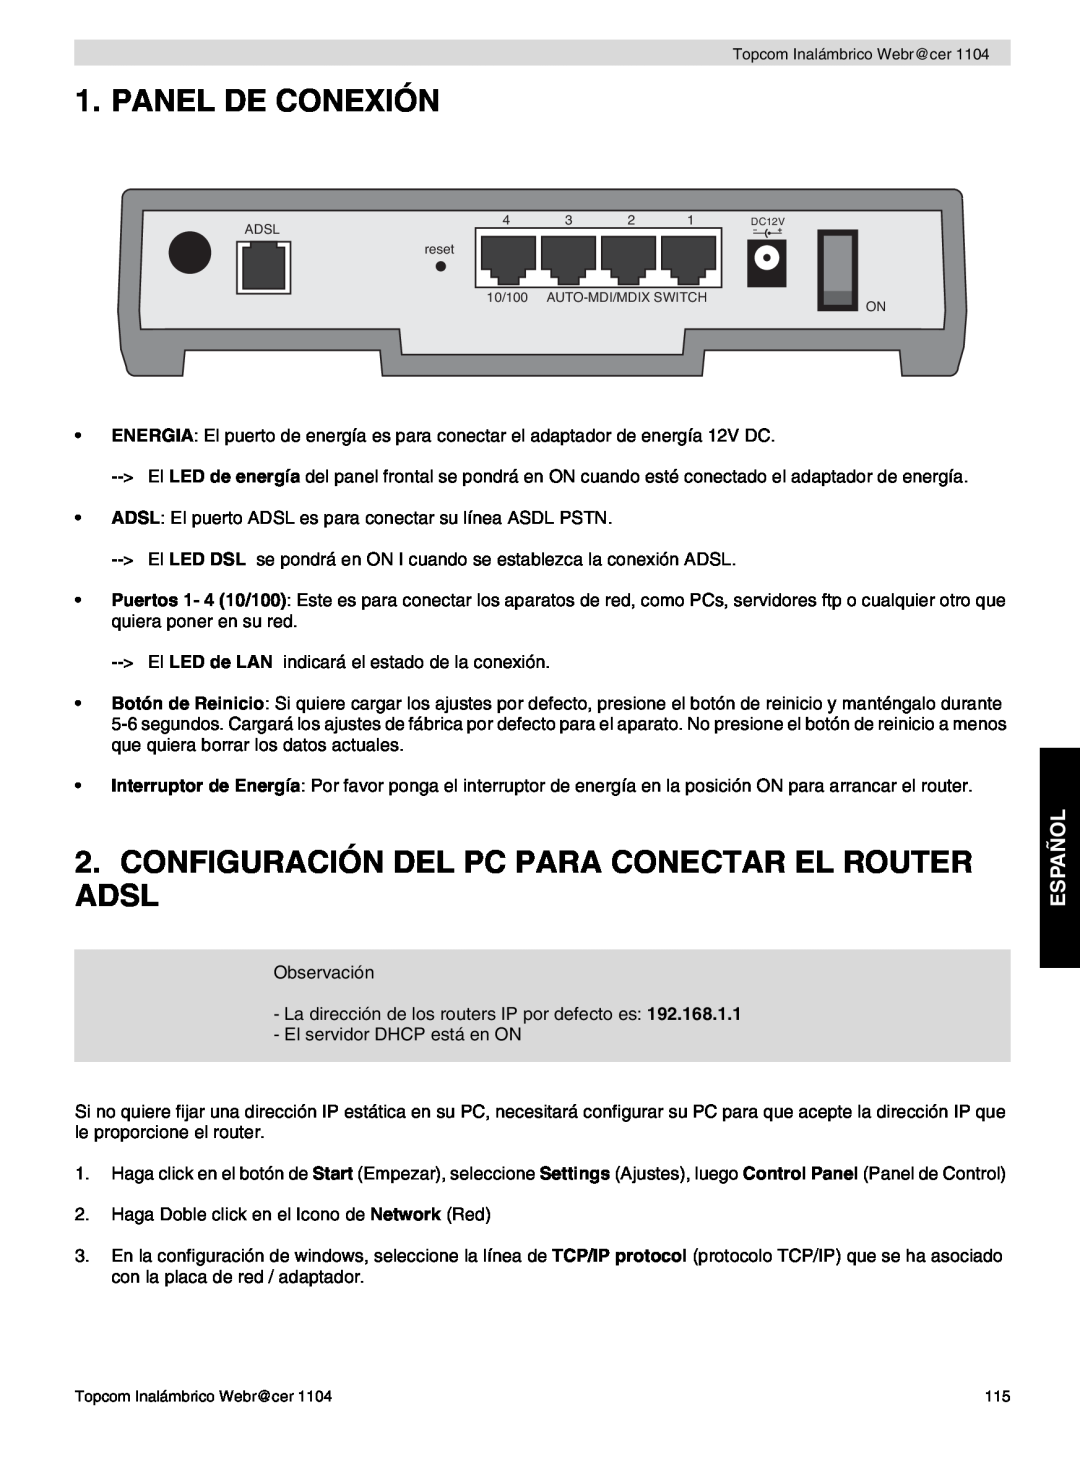 Topcom 1104 manual do utilizador Panel De Conexión, Configuración Del Pc Para Conectar El Router Adsl, Español 